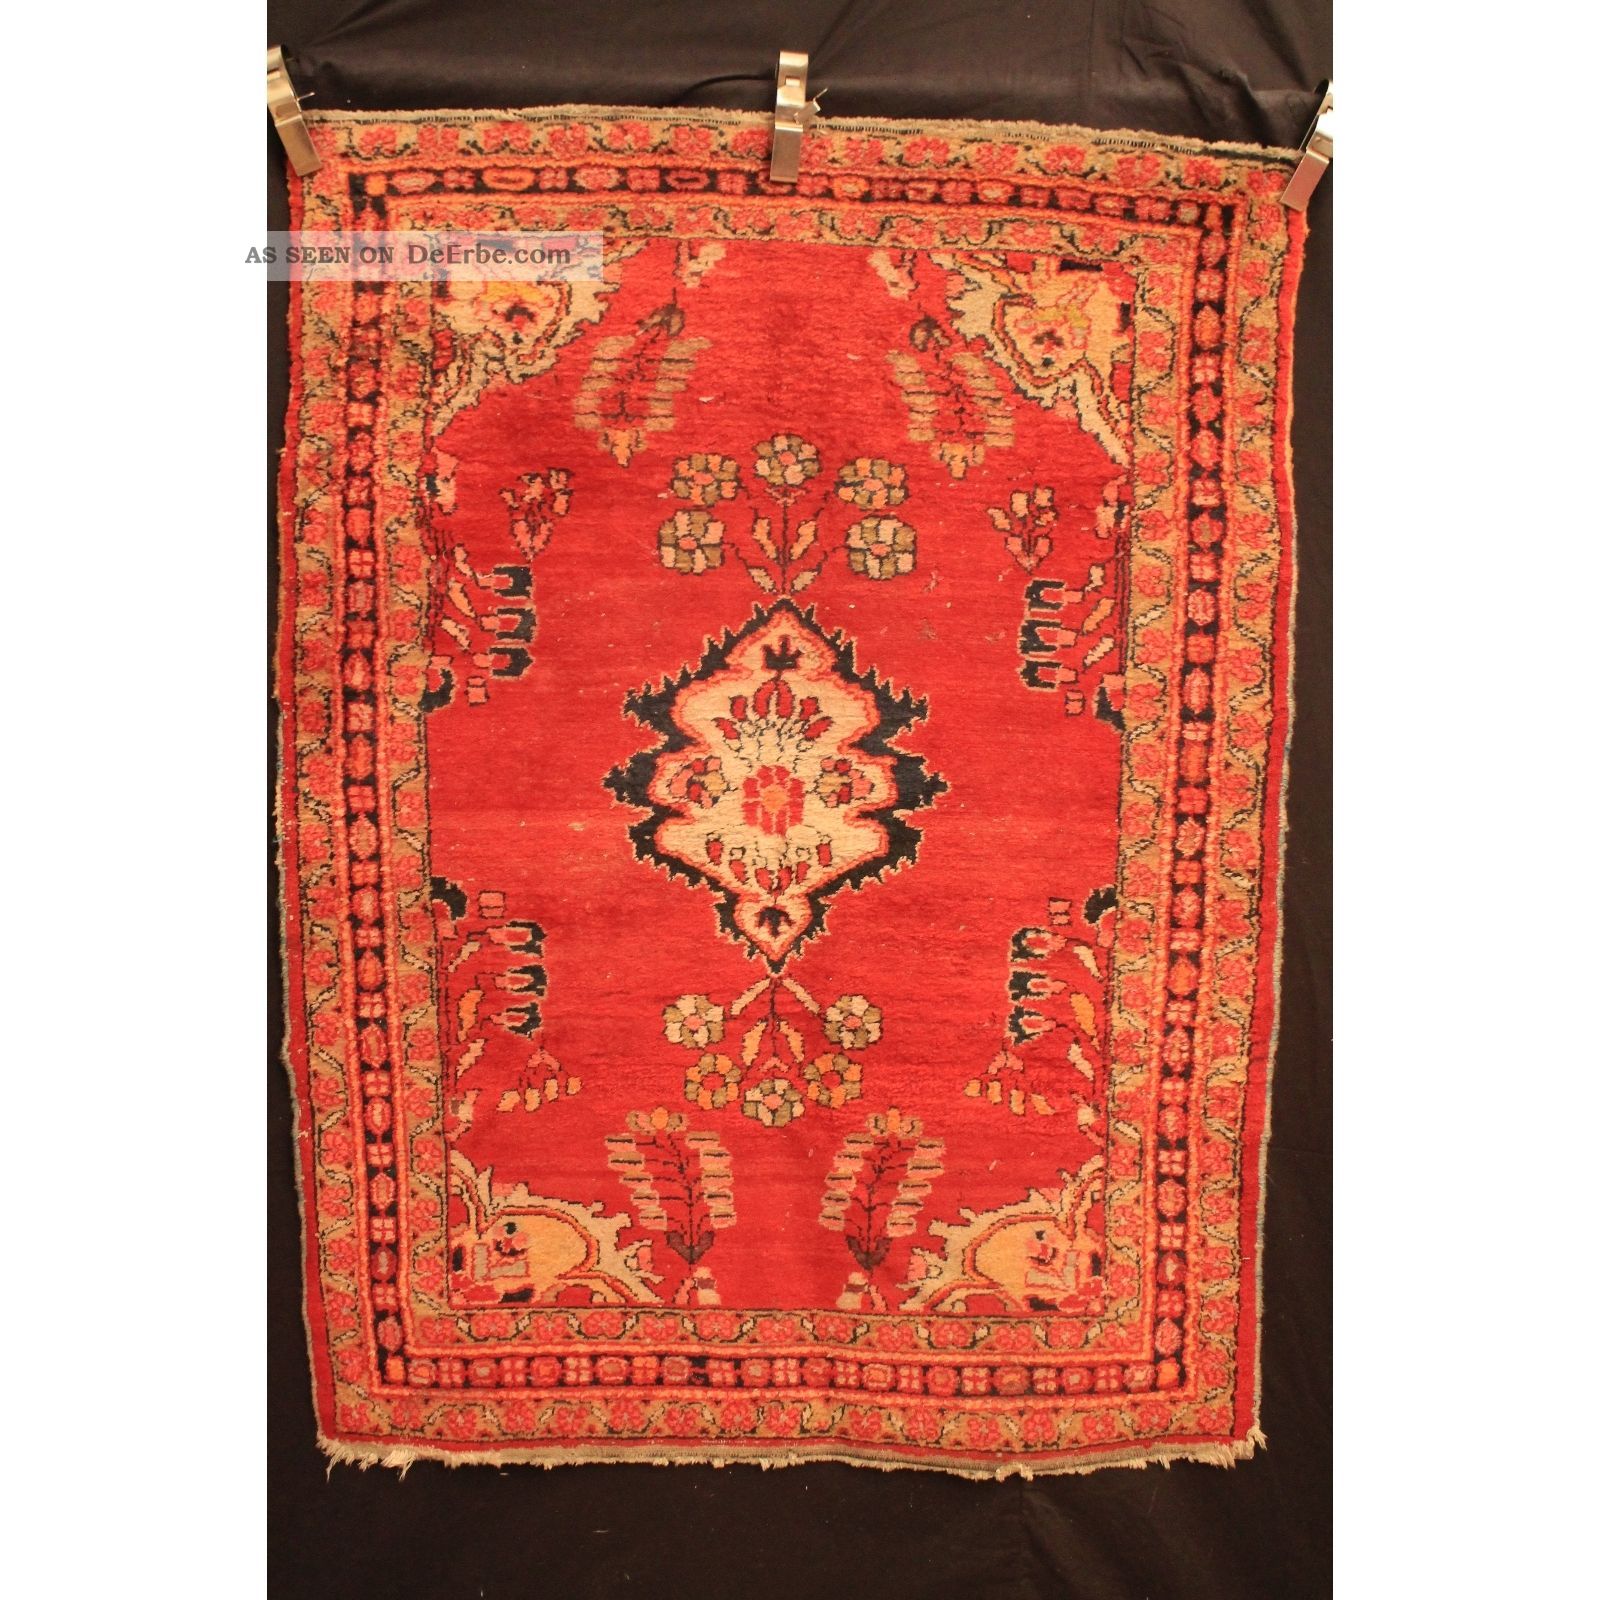 Alt Antik Handgeknüpft Orient Sa Rug Lillian Teppich Carpet Old Rug 150x110cm Teppiche & Flachgewebe Bild